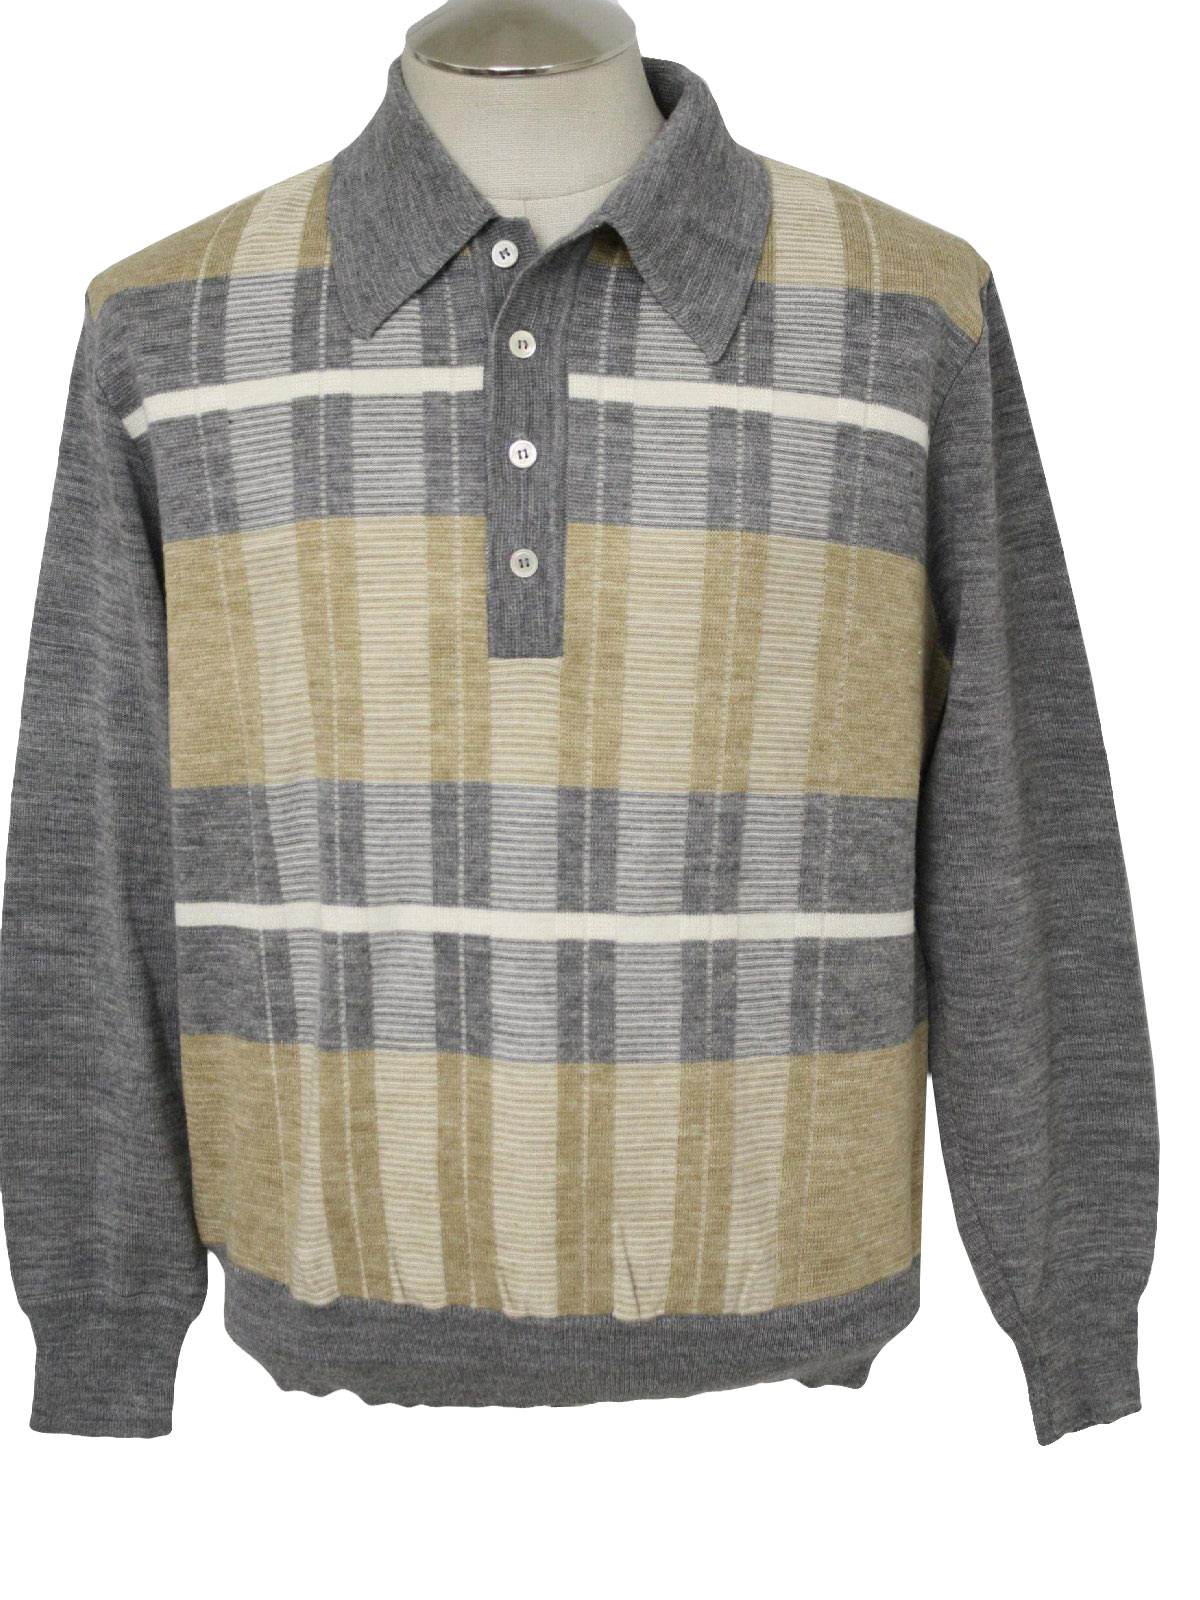 Retro 1970s Sweater: 70s -Damon- Mens grey, cream and off white texture ...